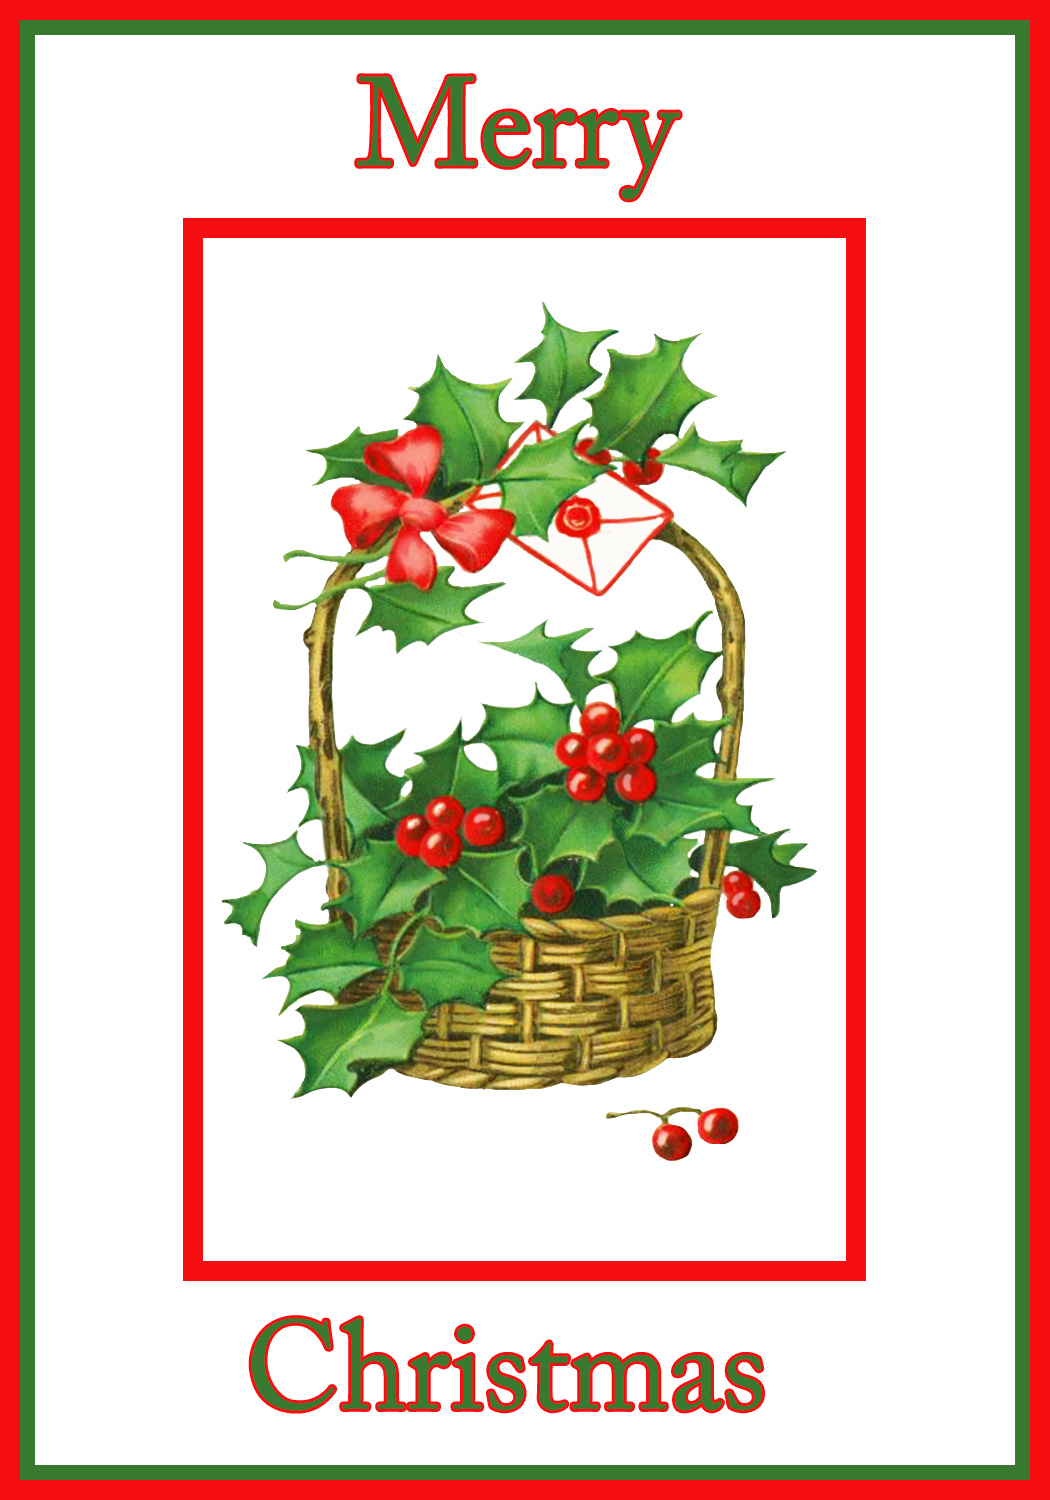 Free Printable Christmas Cards Free Printable Greeting Cards